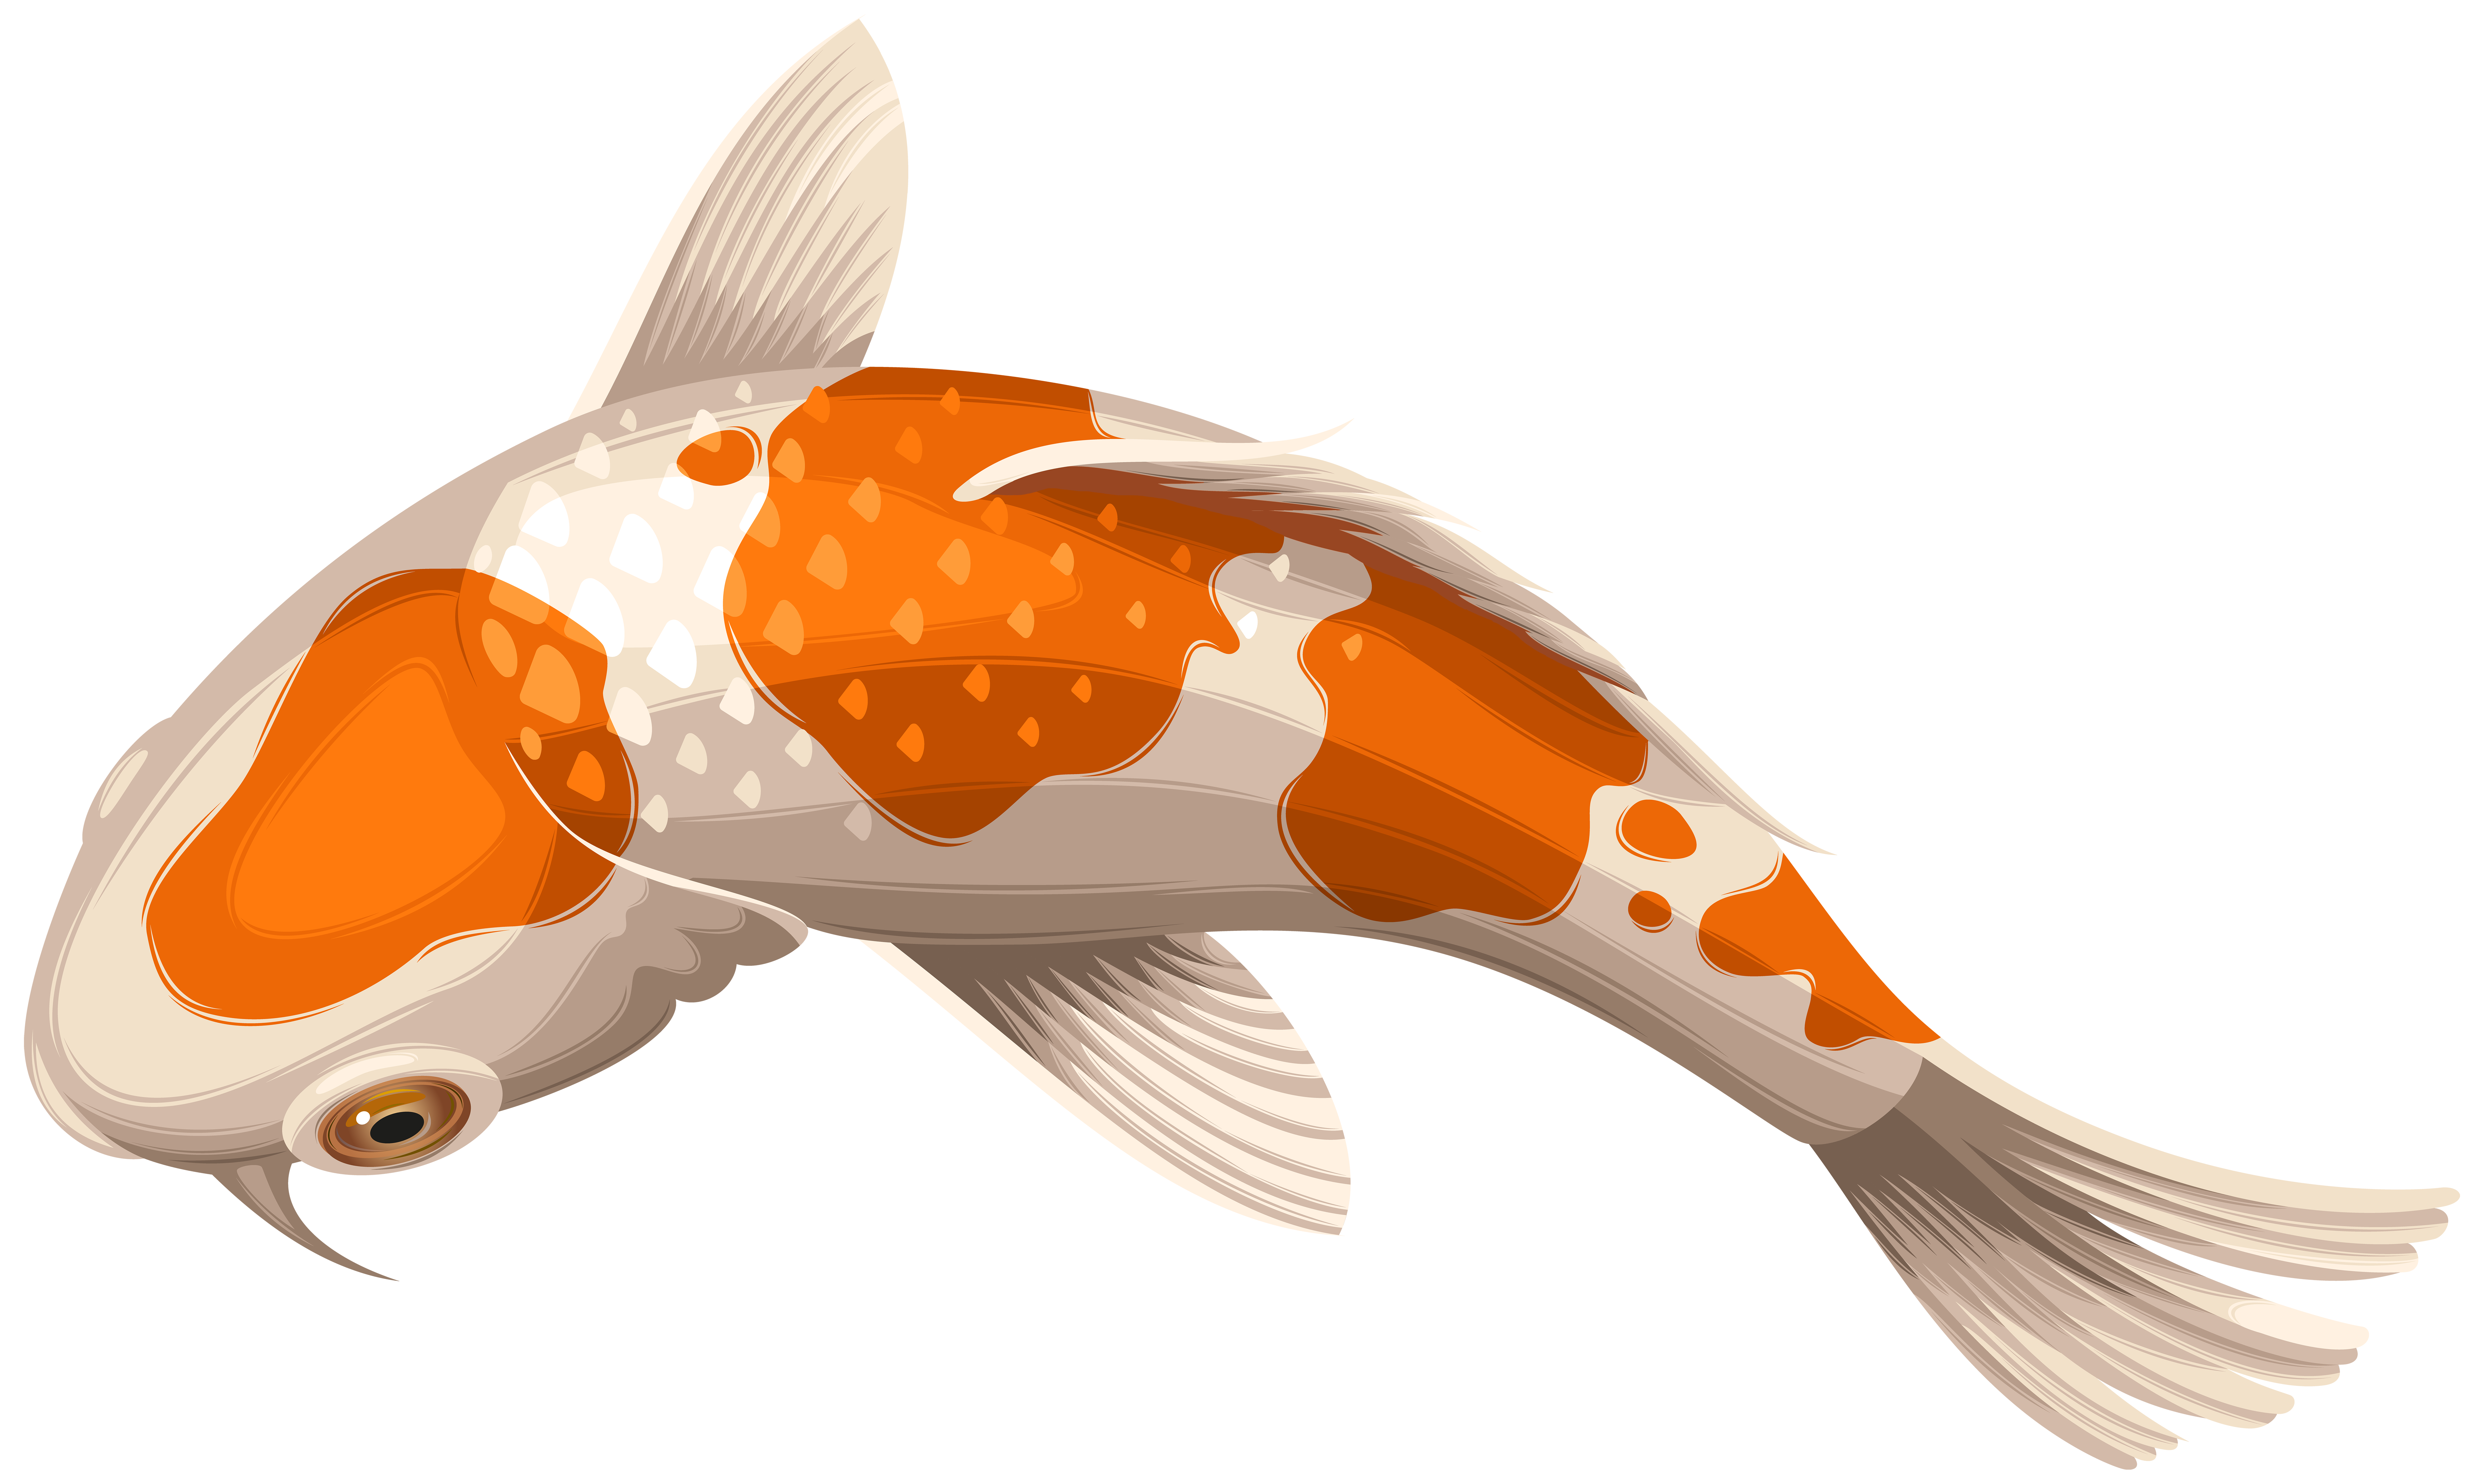 White and Orange Koi Fish Transparent Clip Art PNG Image